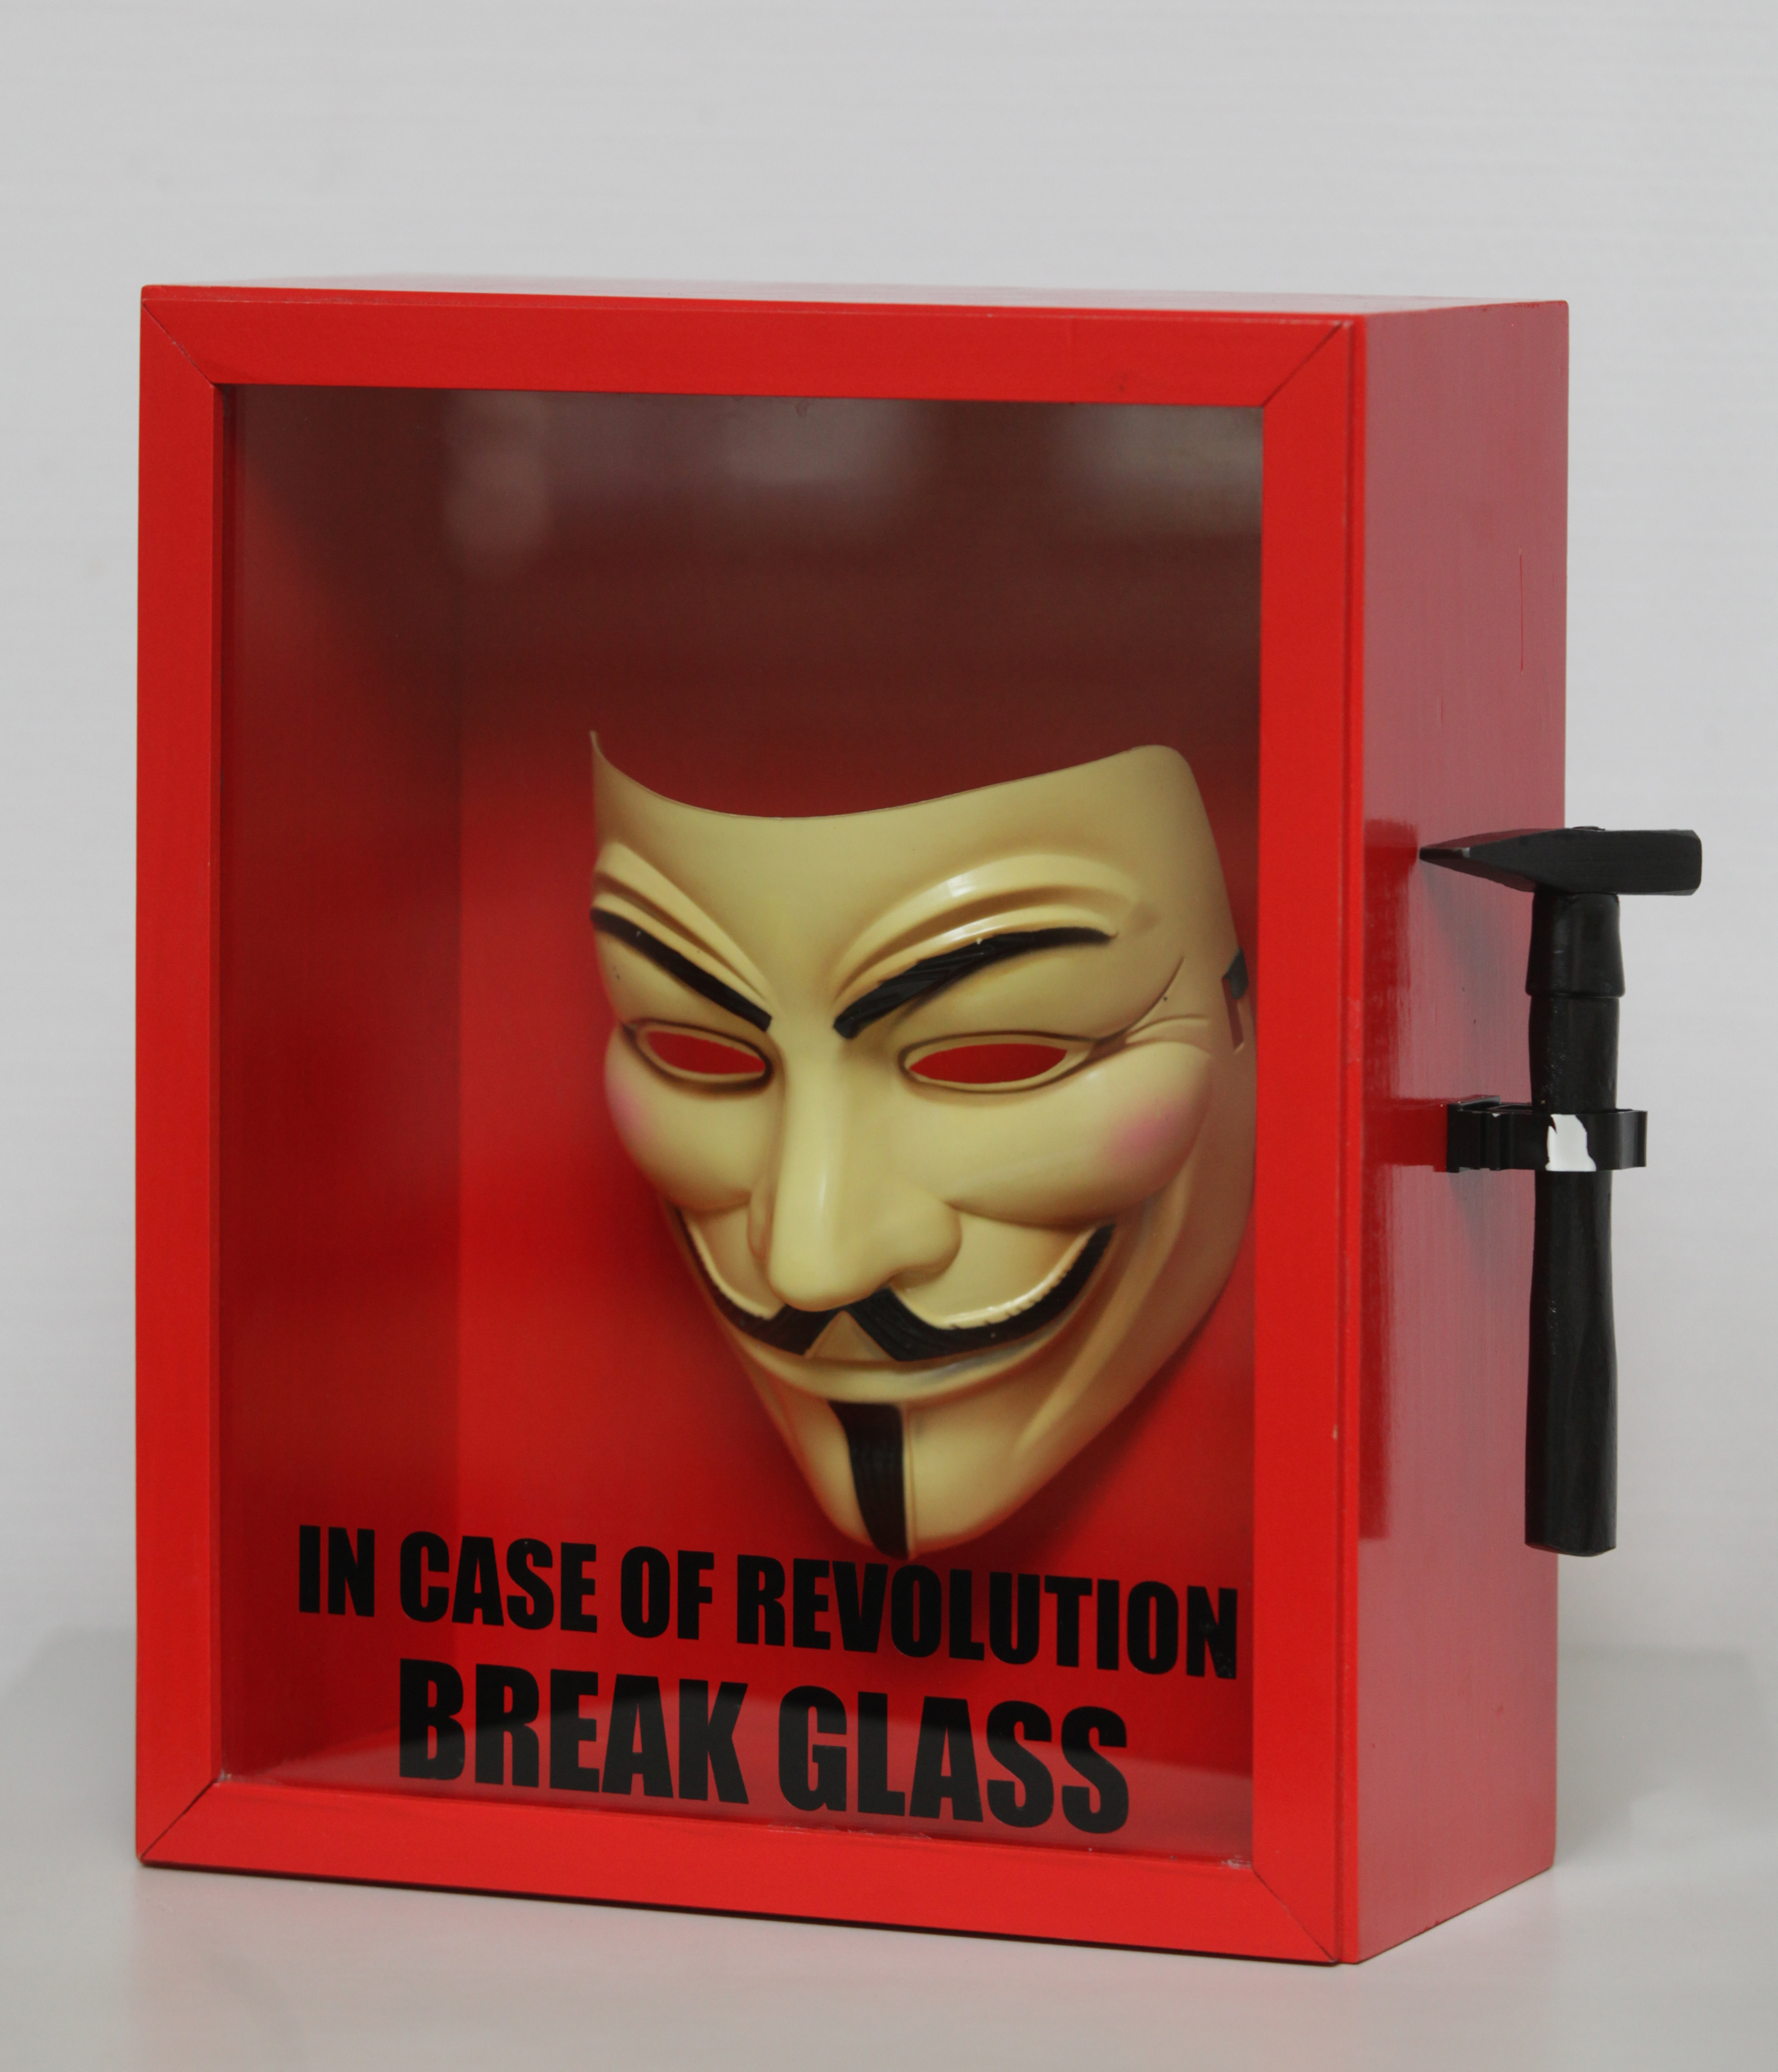 In case of Revolution